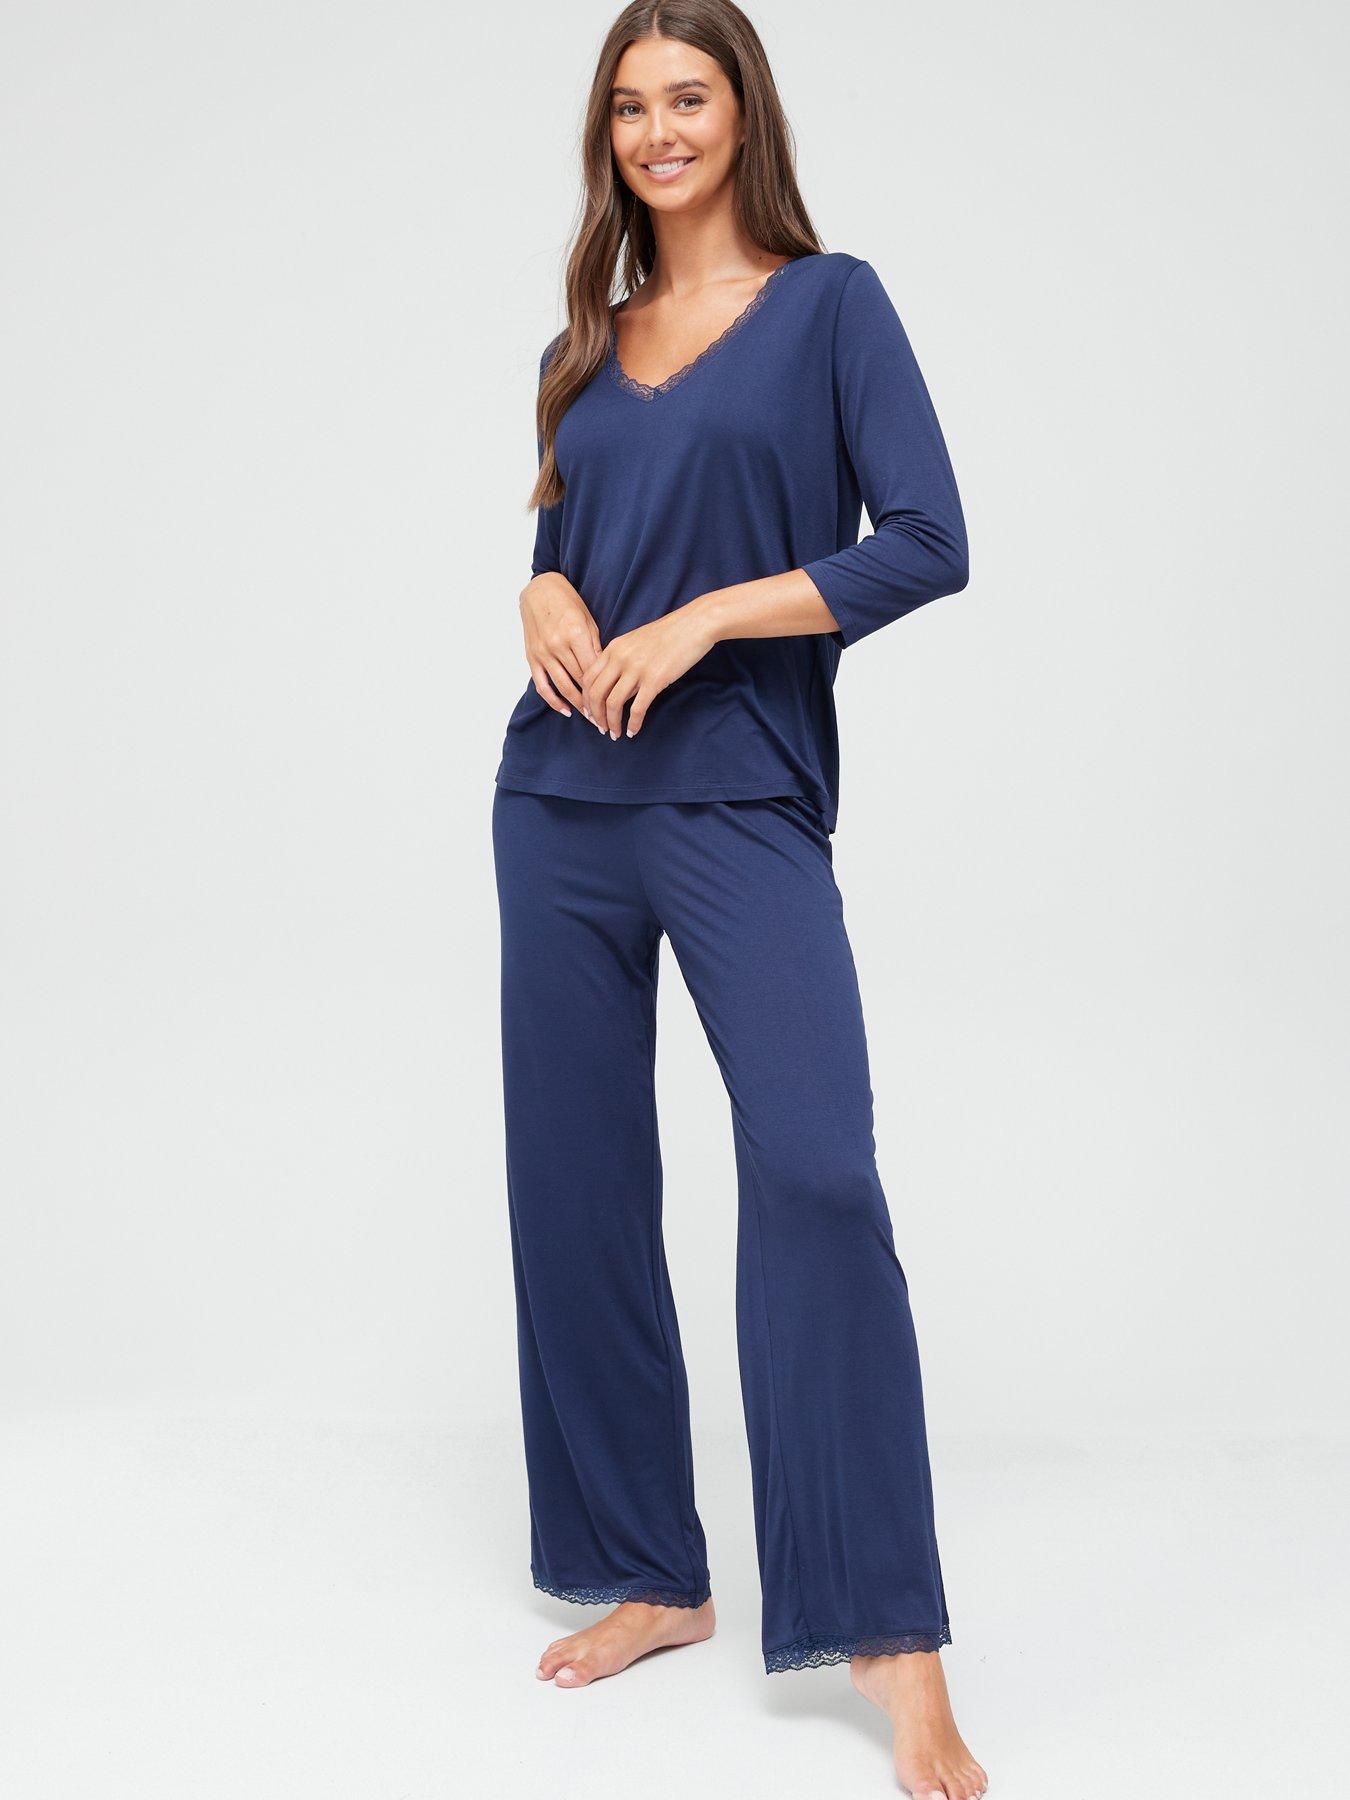 Details about   NEW Ladies 100% Cotton Brave Soul 'Striped' Pyjama Set Nightwear/Loungewear 